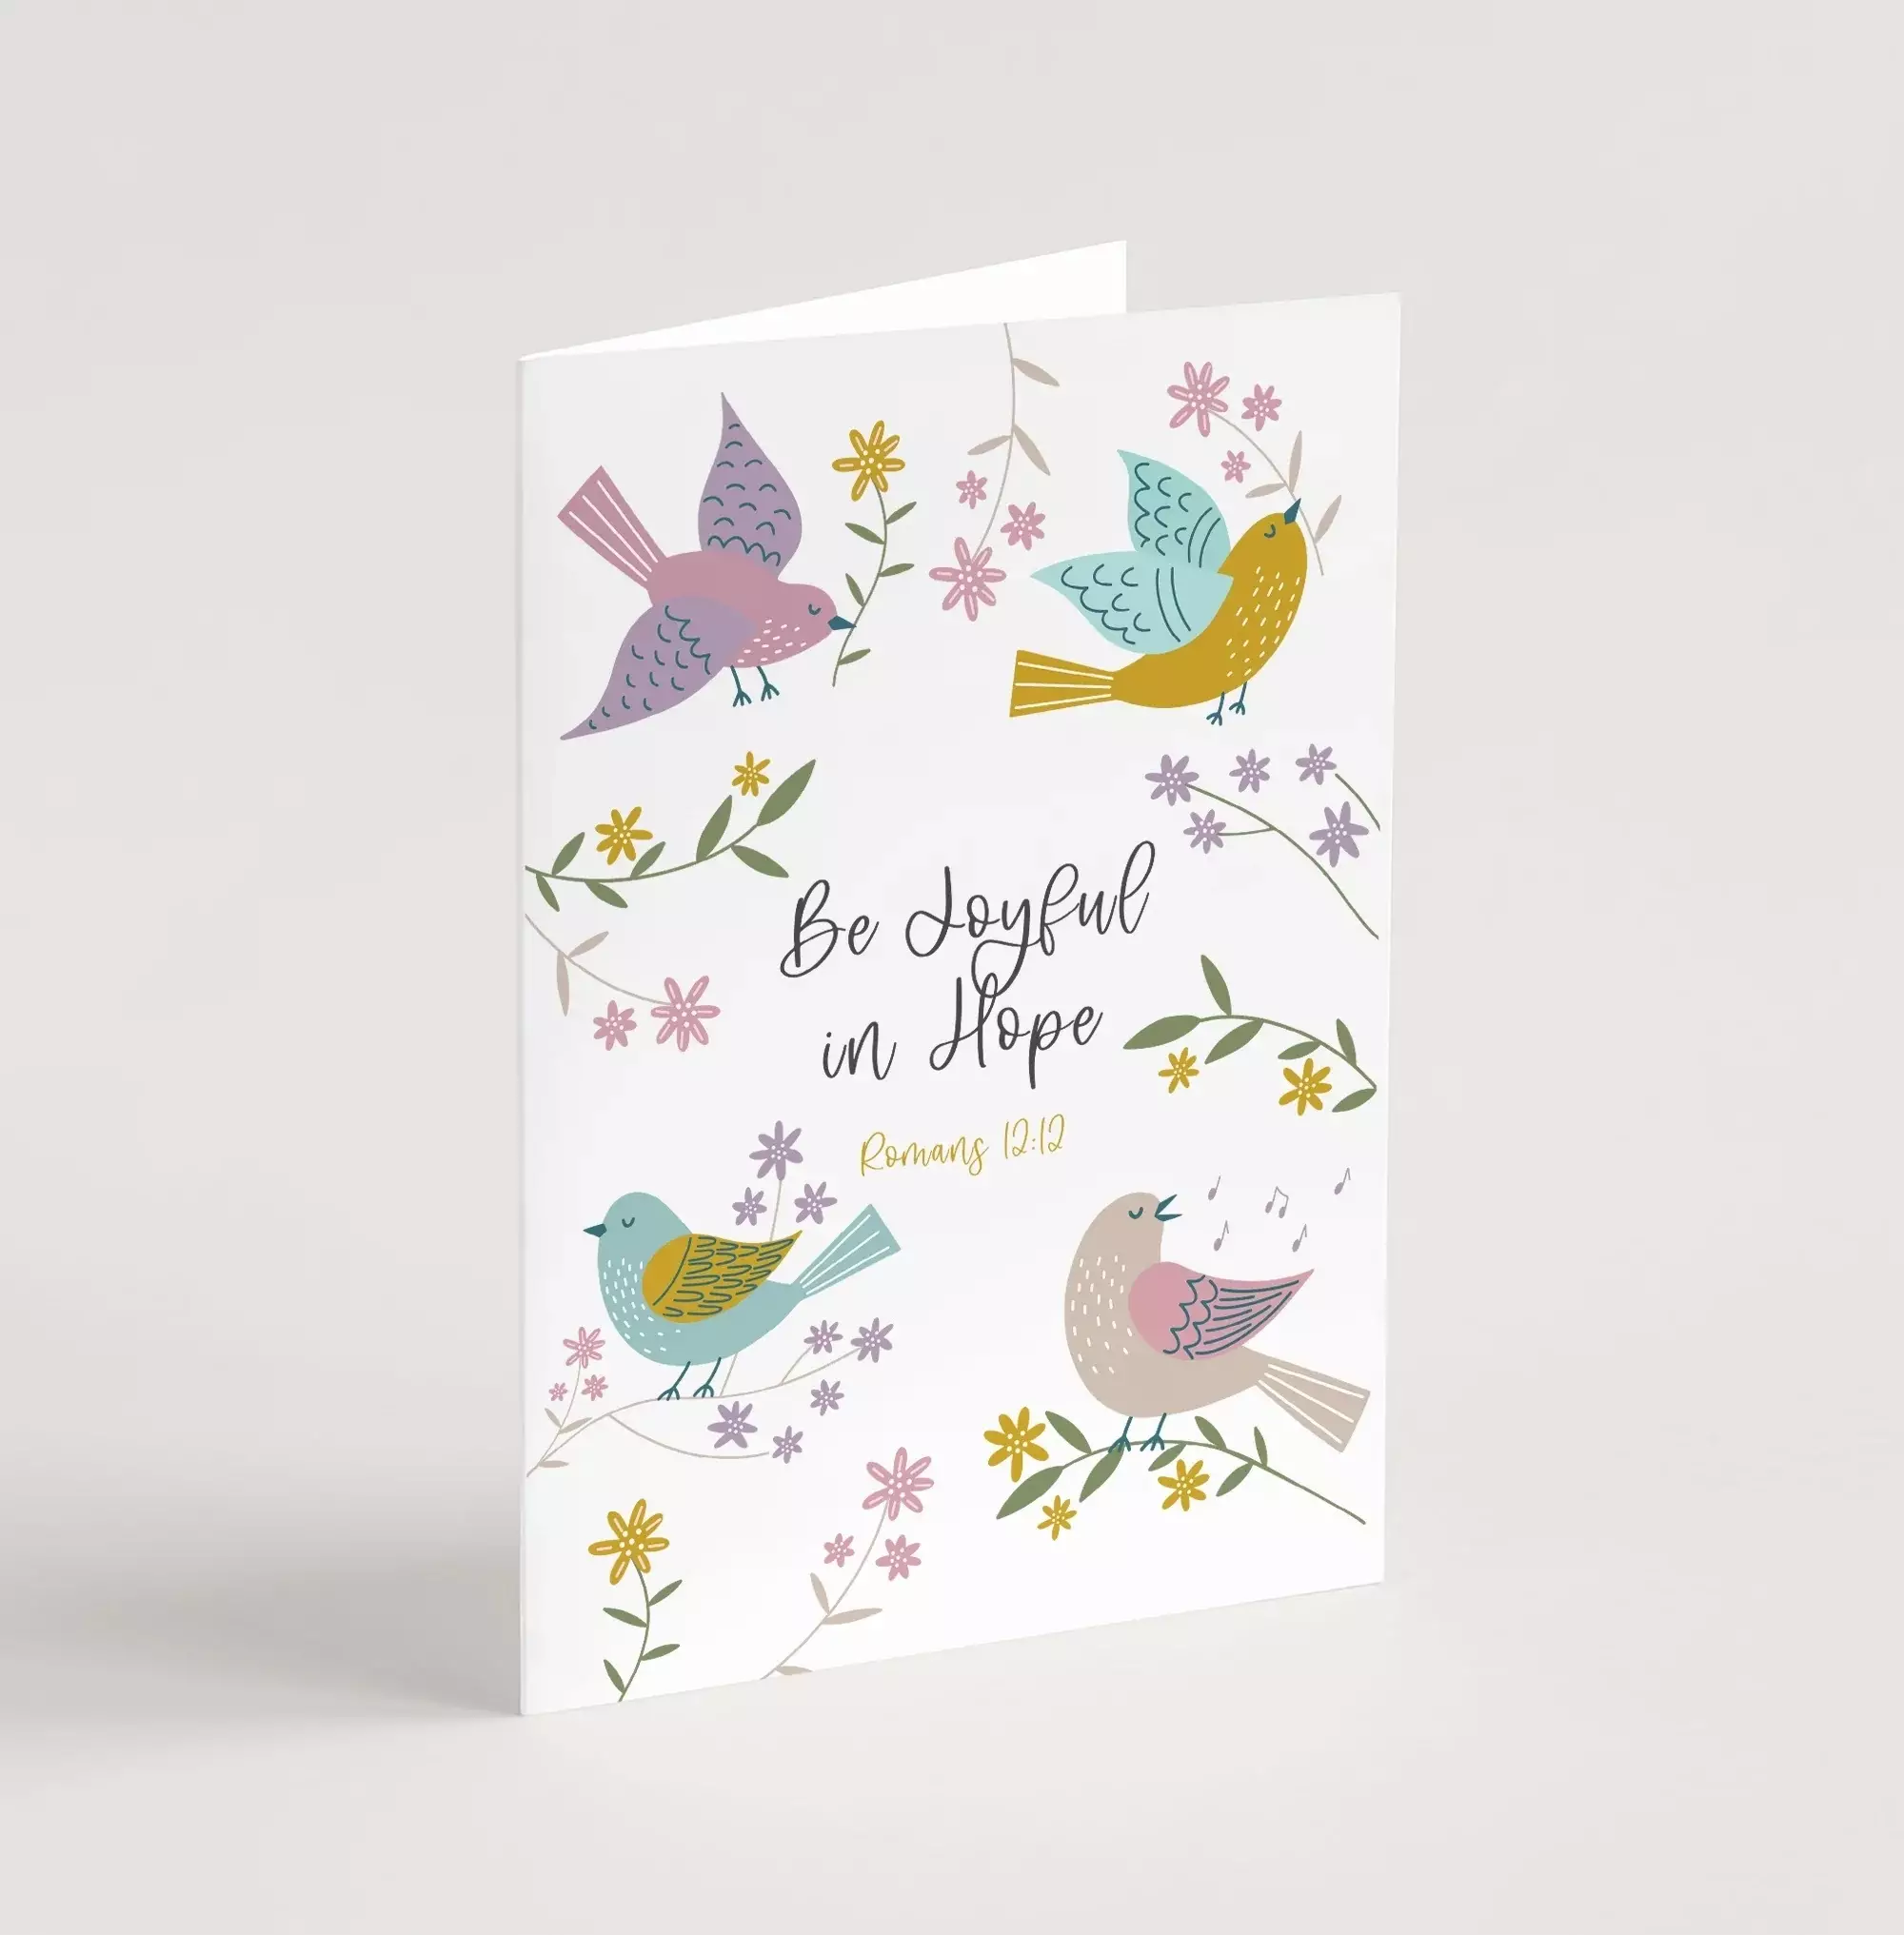 'Be Joyful in Hope' (Birds of Joy) A6 Greeting Card